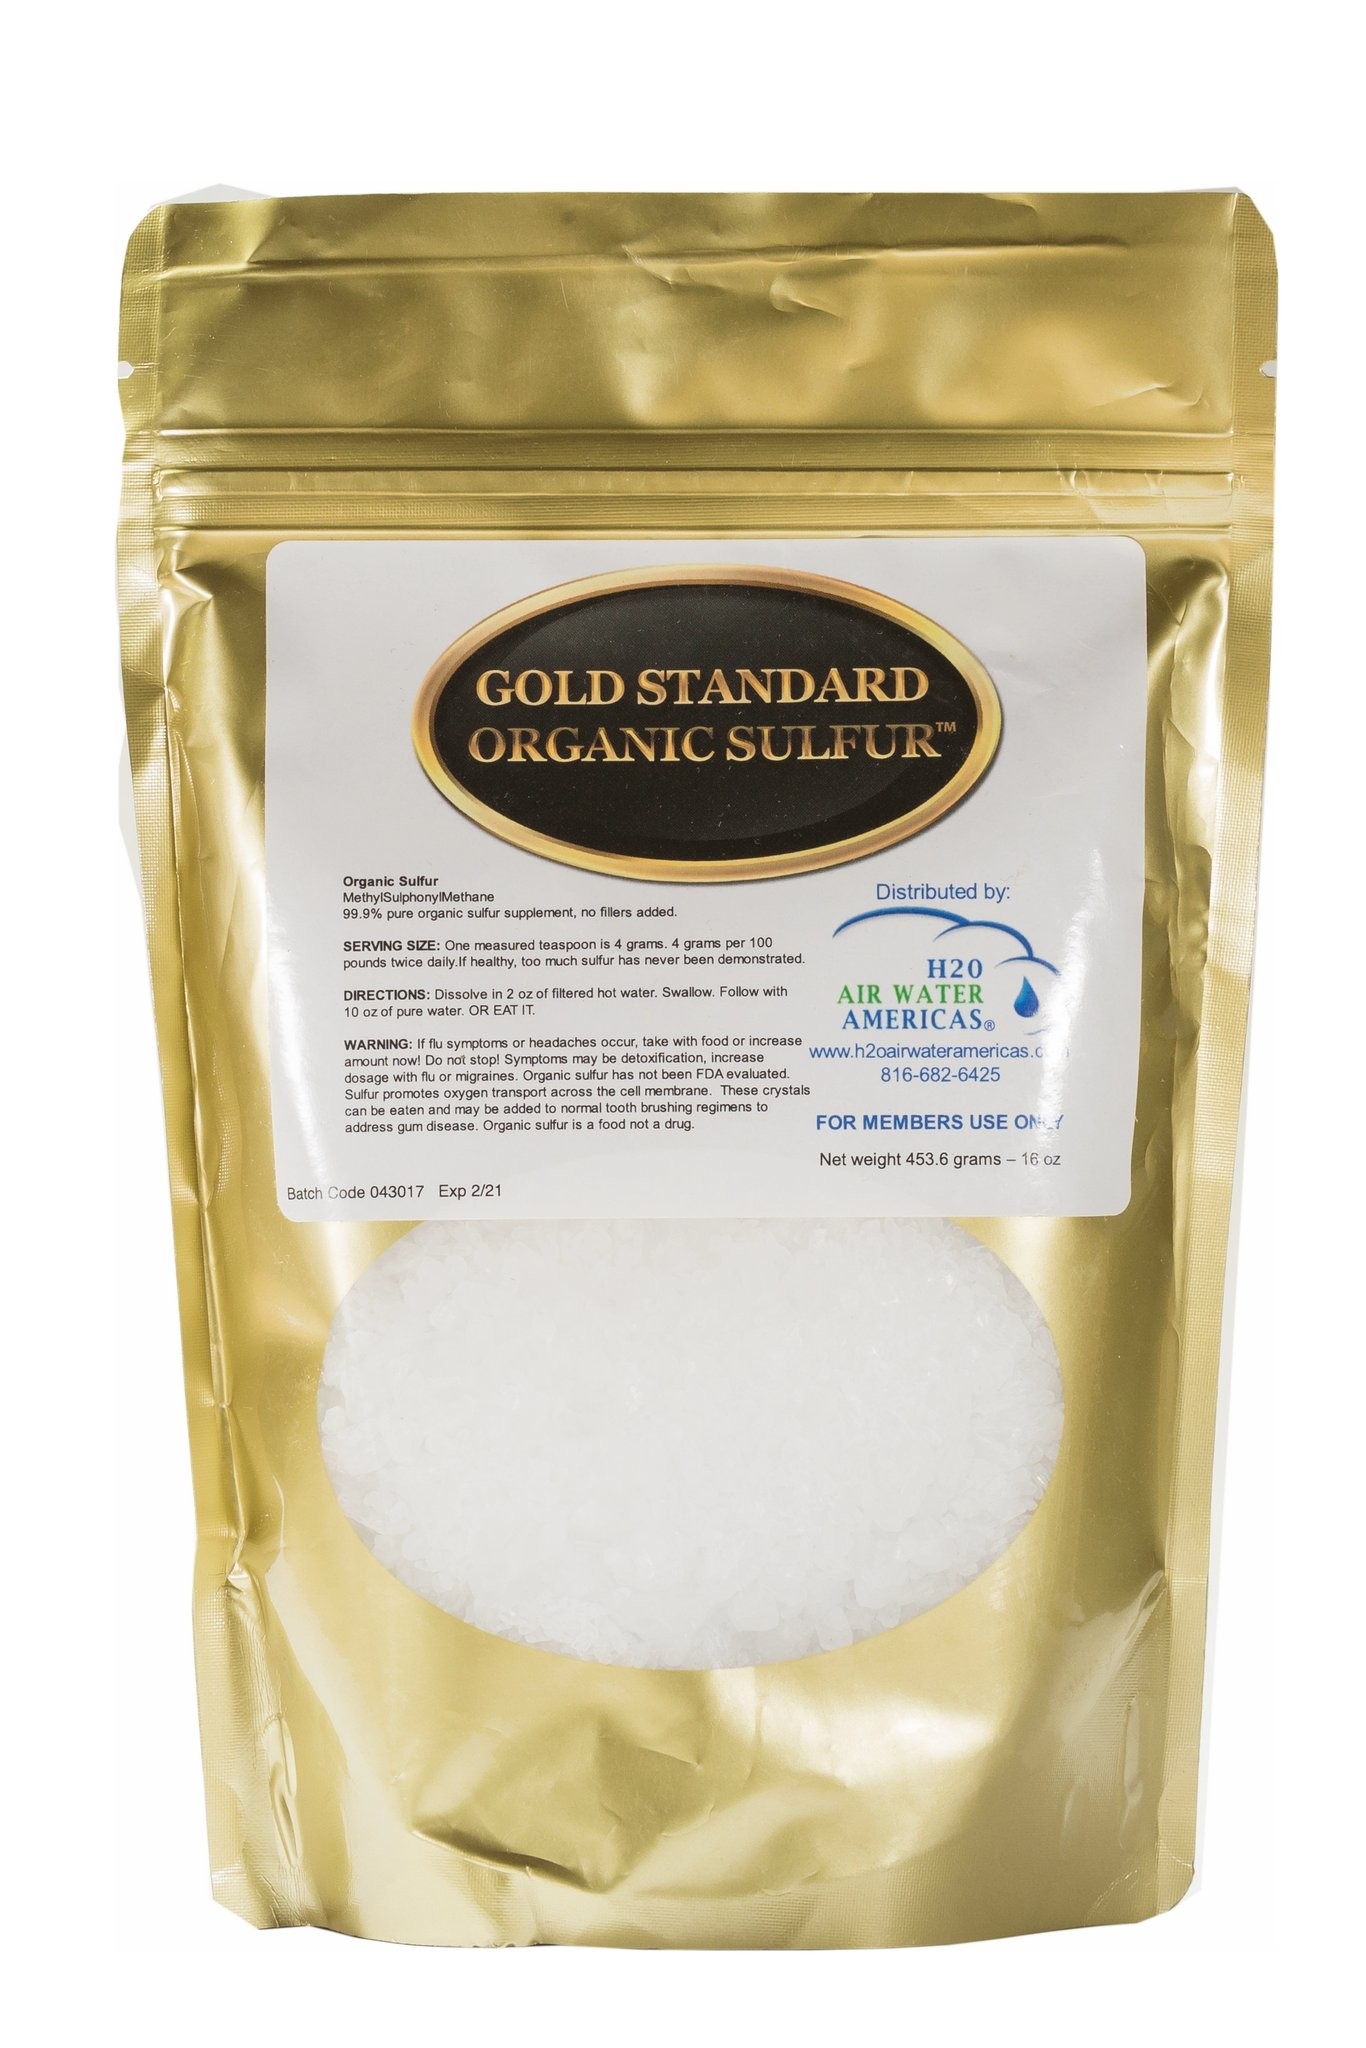 Gold Standard Organic Sulfur (Gold Standard) 1 pound